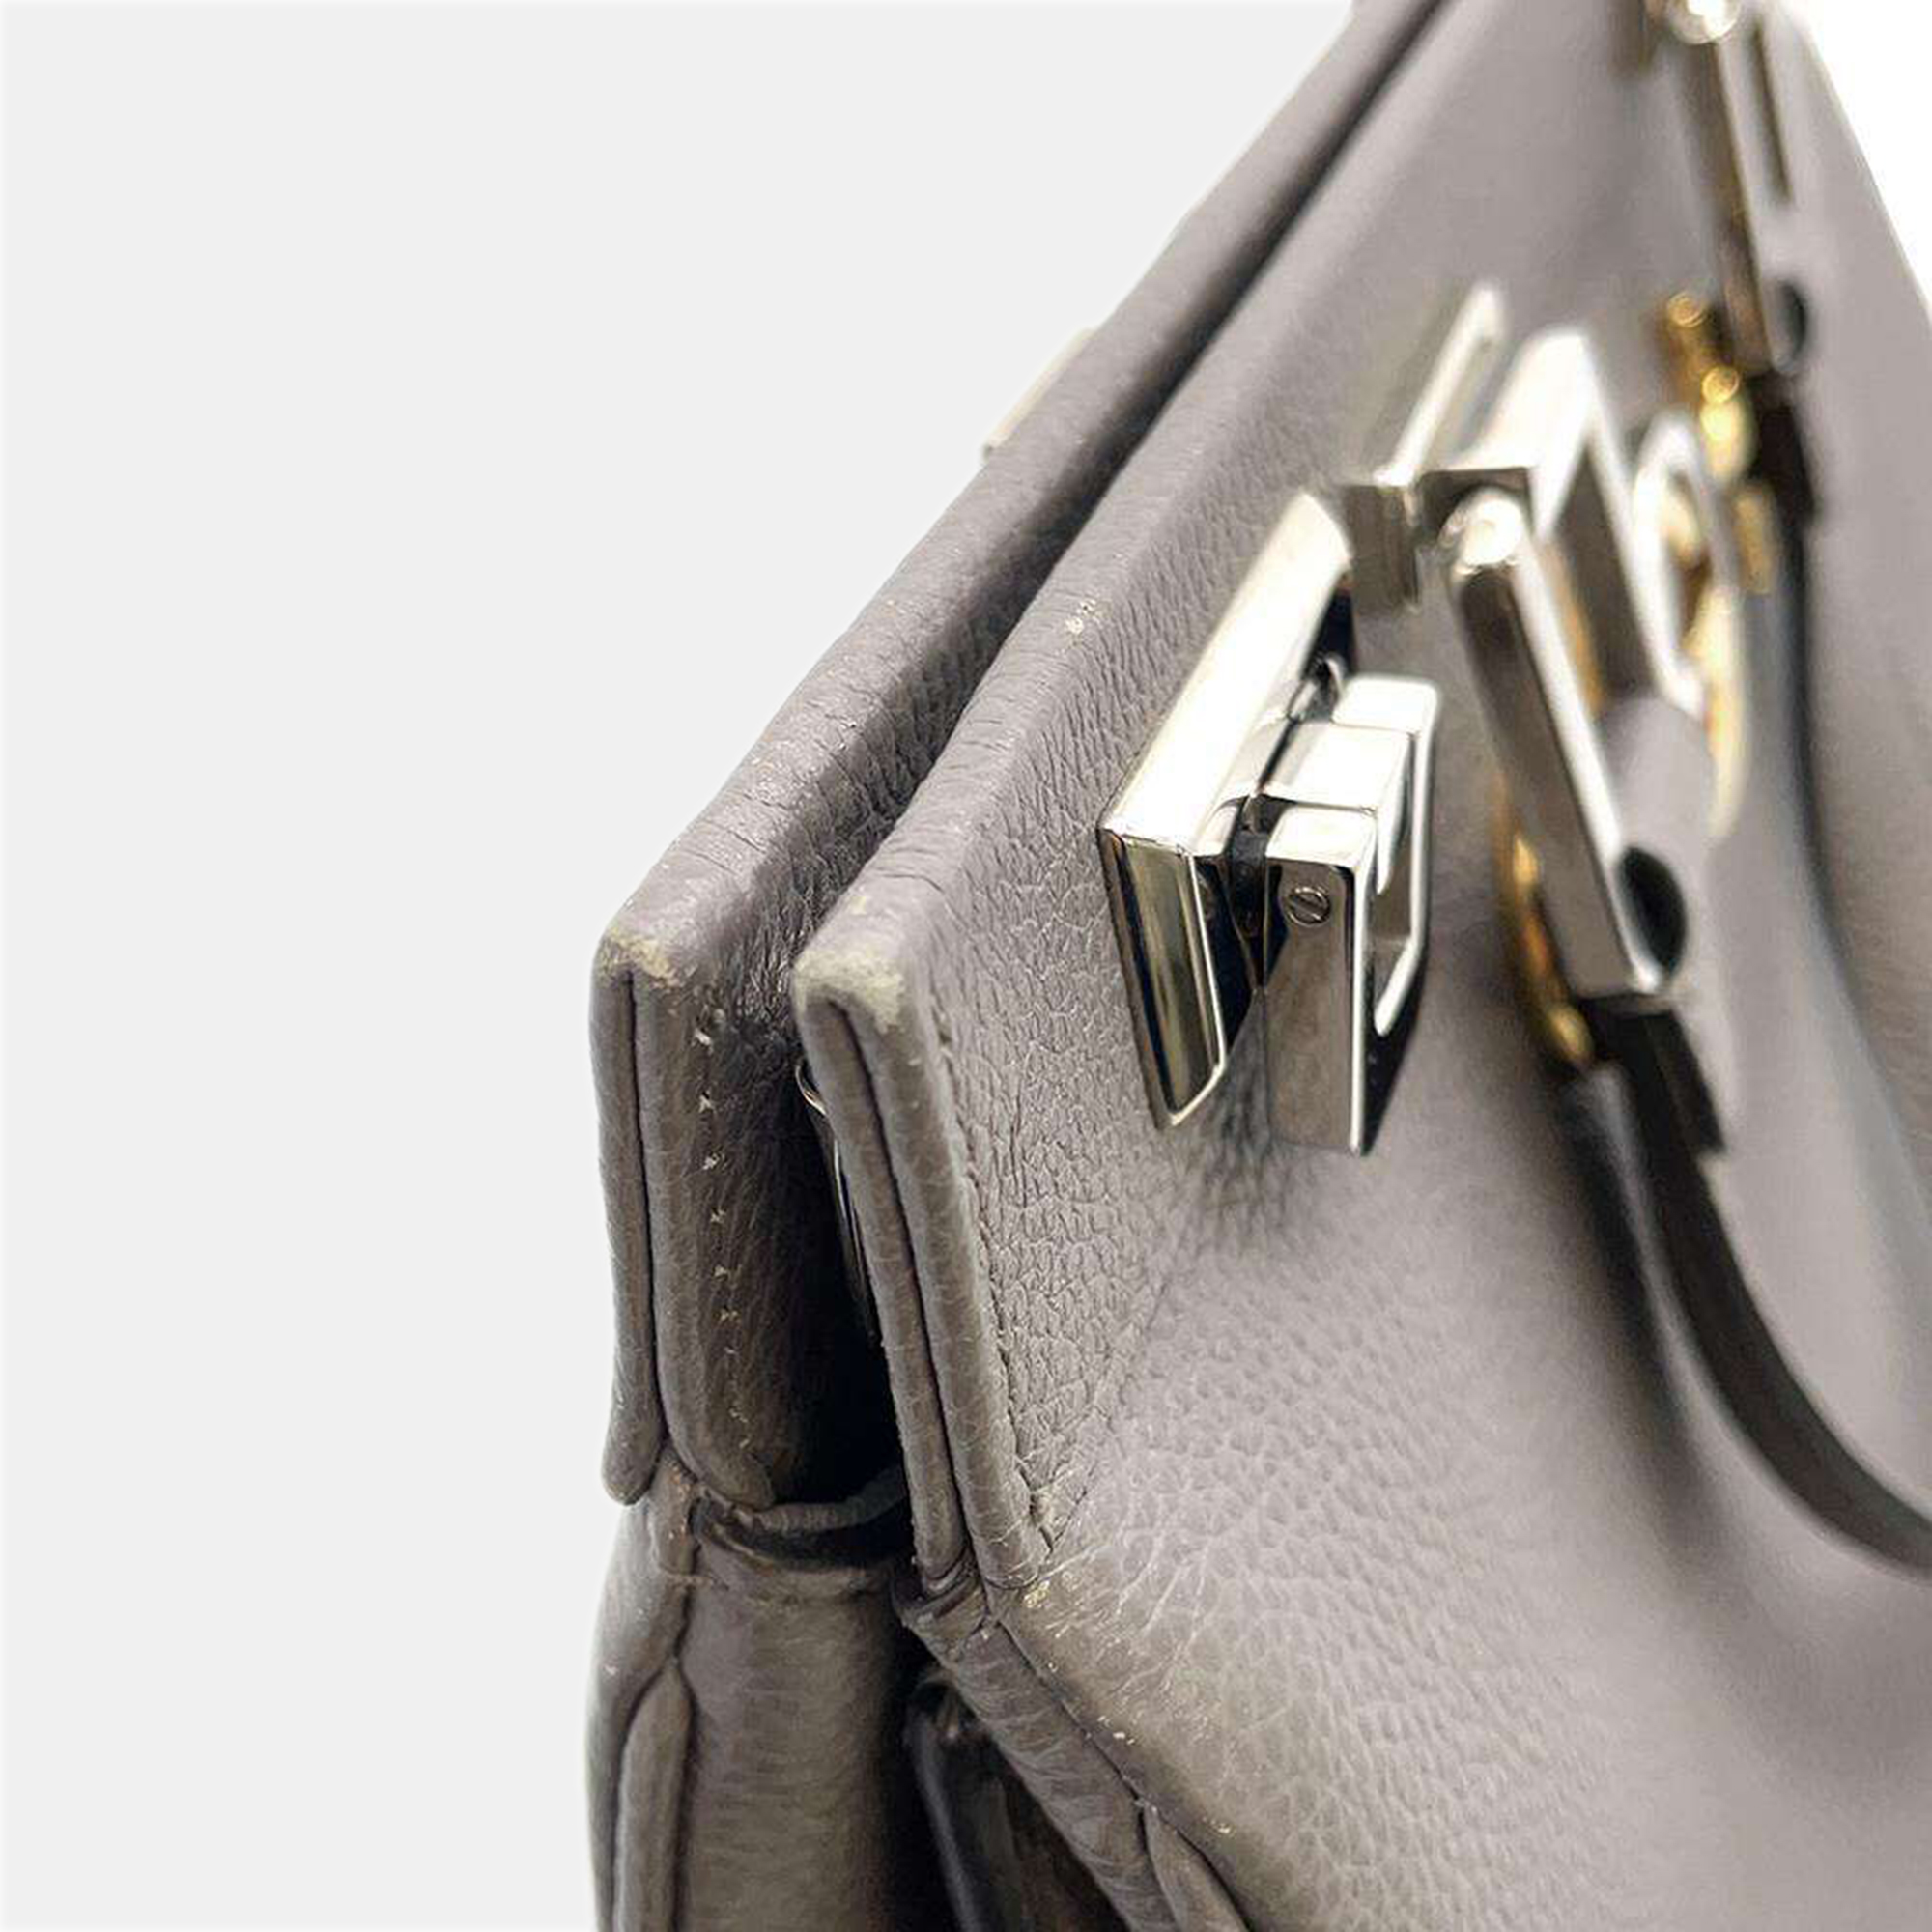 Gucci Grey Leather Zumi Top Handle Bag